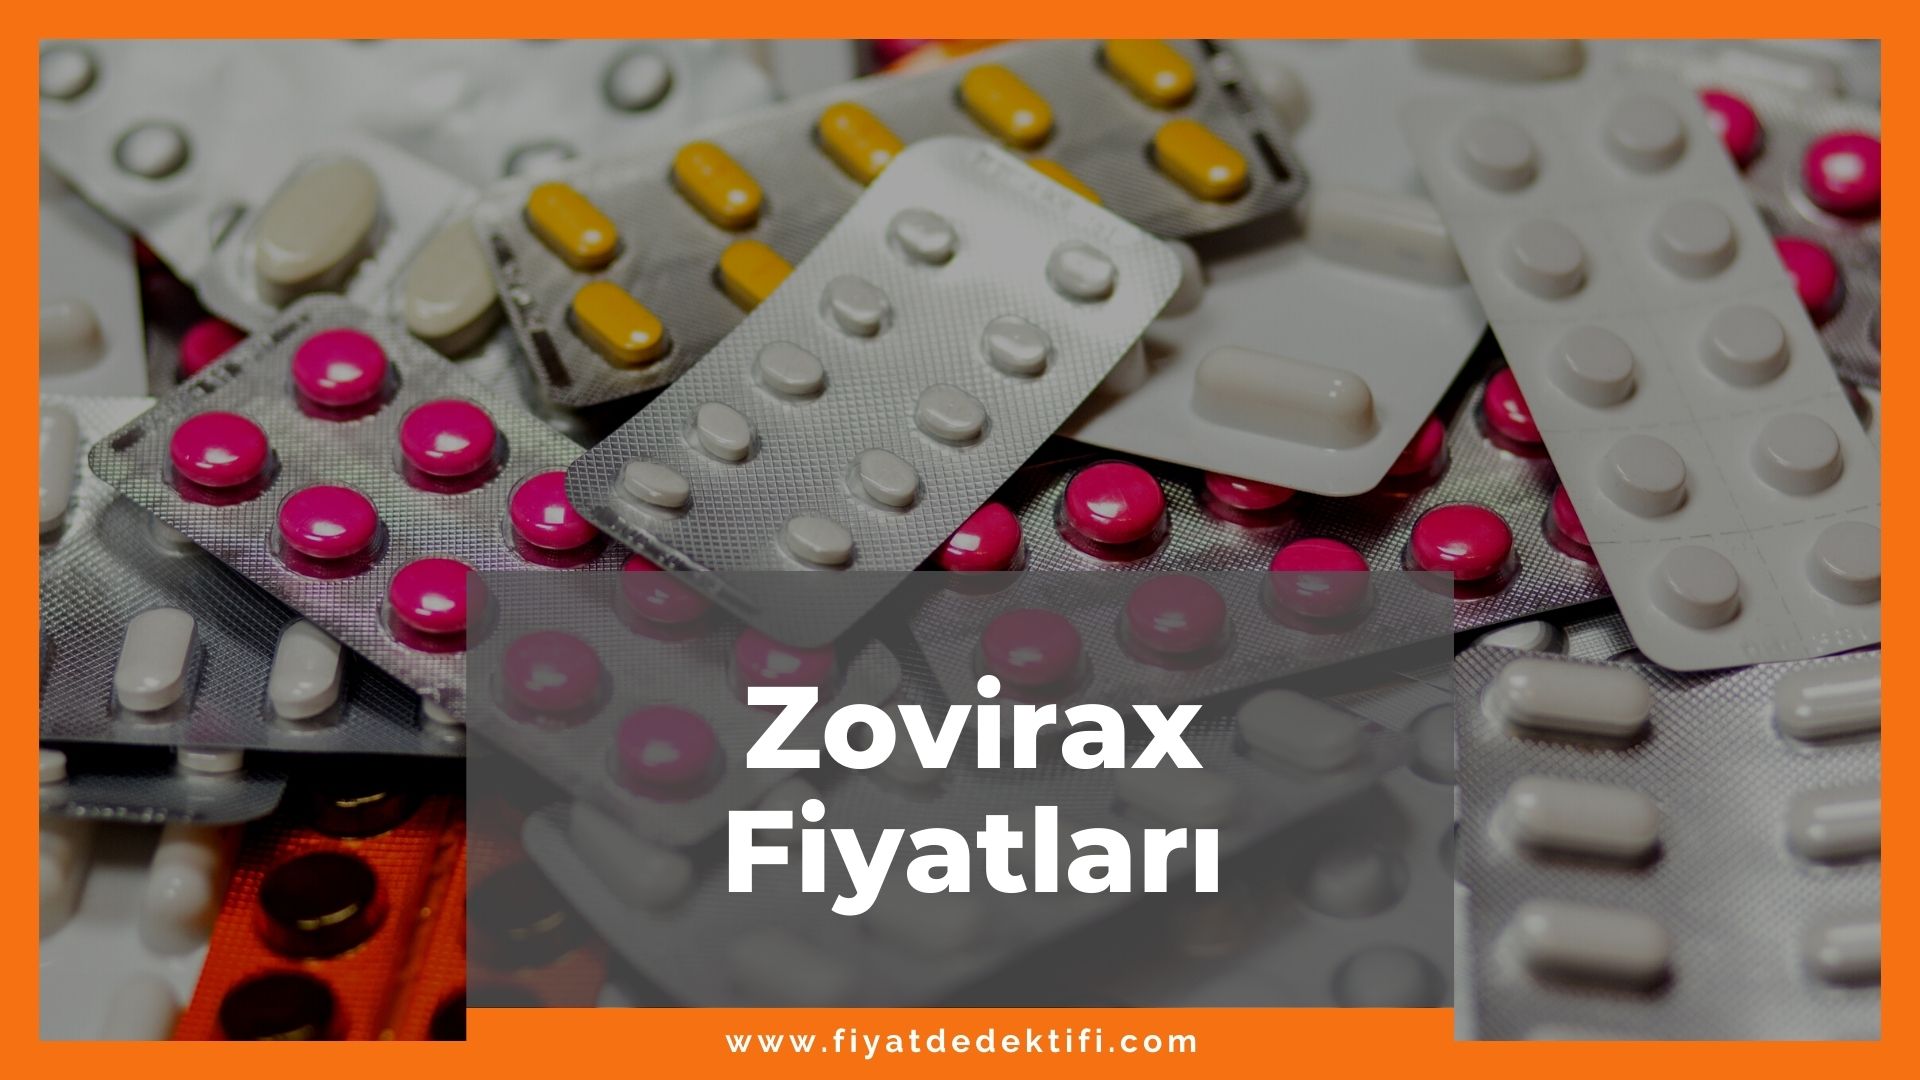 Zovirax Fiyat 2021, Zovirax Fiyatı, Zovirax Uçuk Kremi Fiyatı, zovirax fiyatı zamlandı mı, zovirax zamlı fiyatı ne kadar oldu